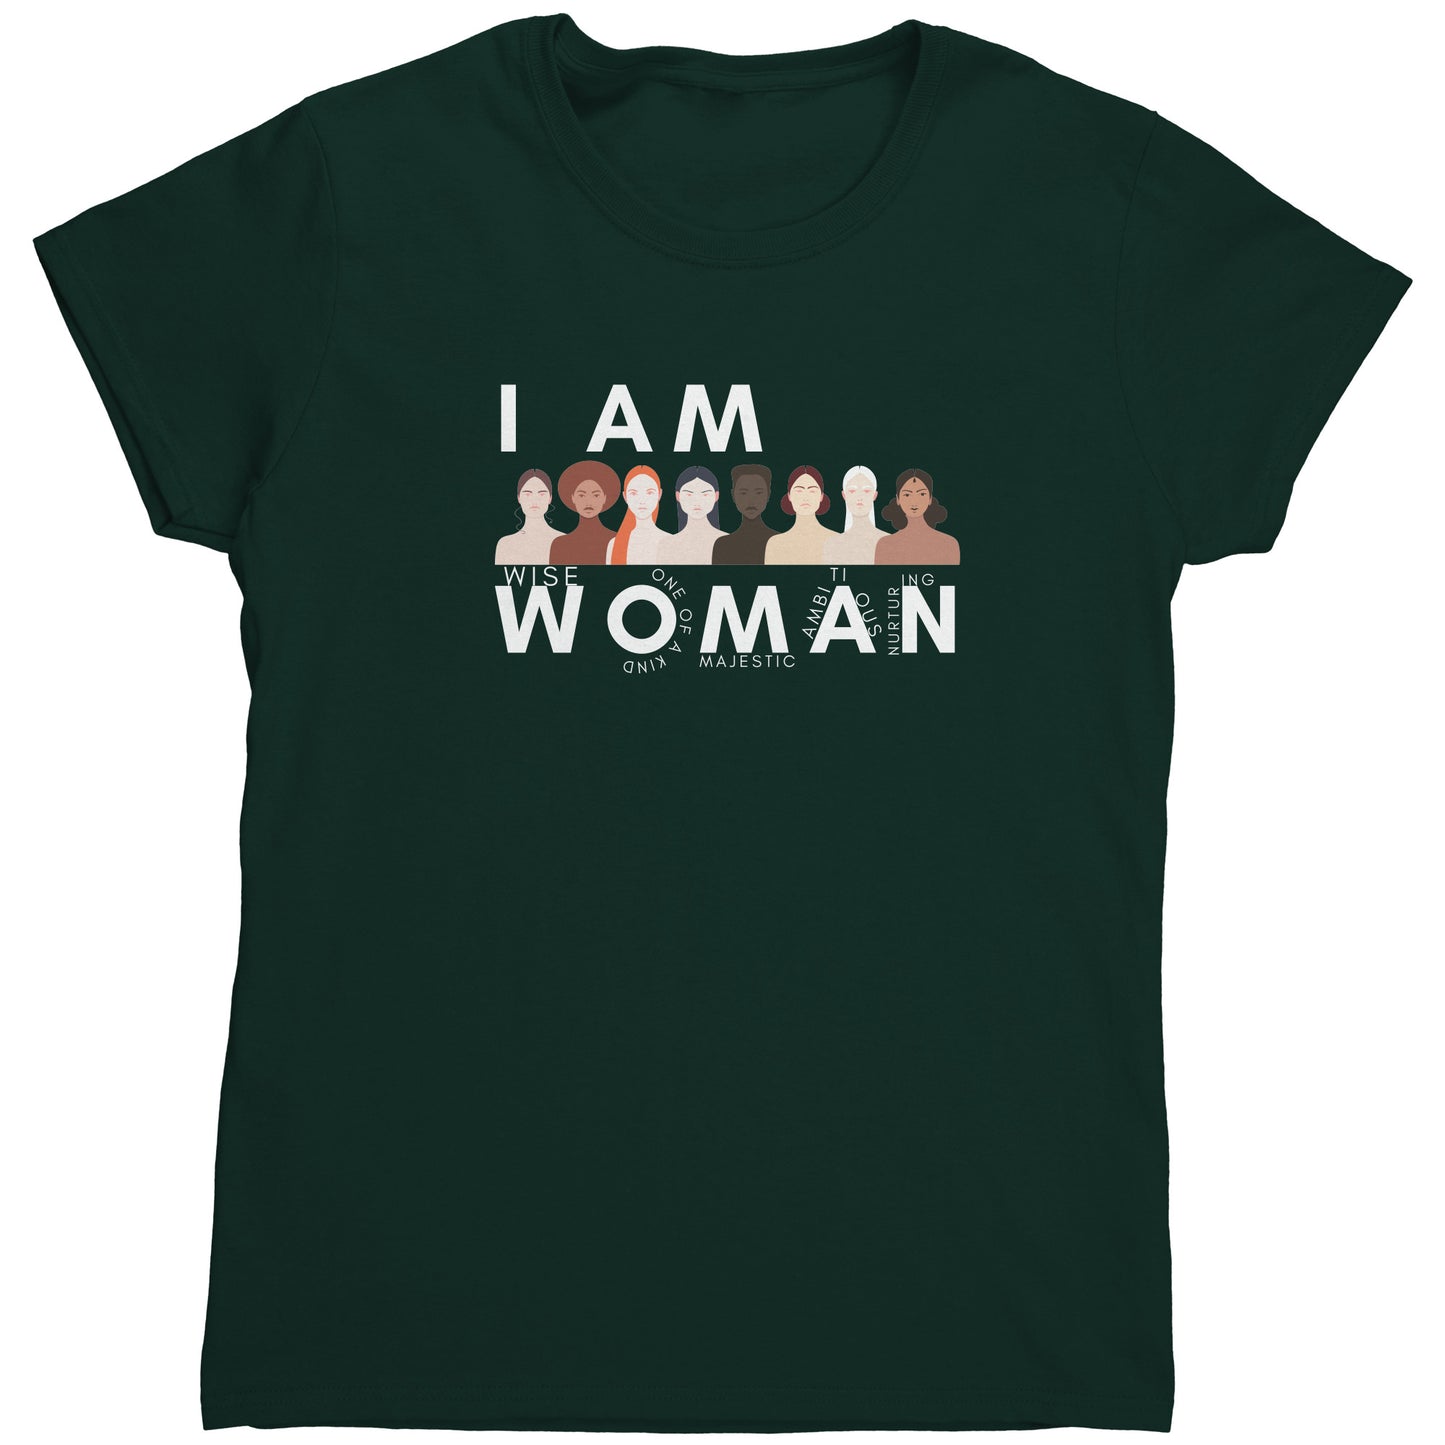 I AM WOMAN Gildan Women's Shirt